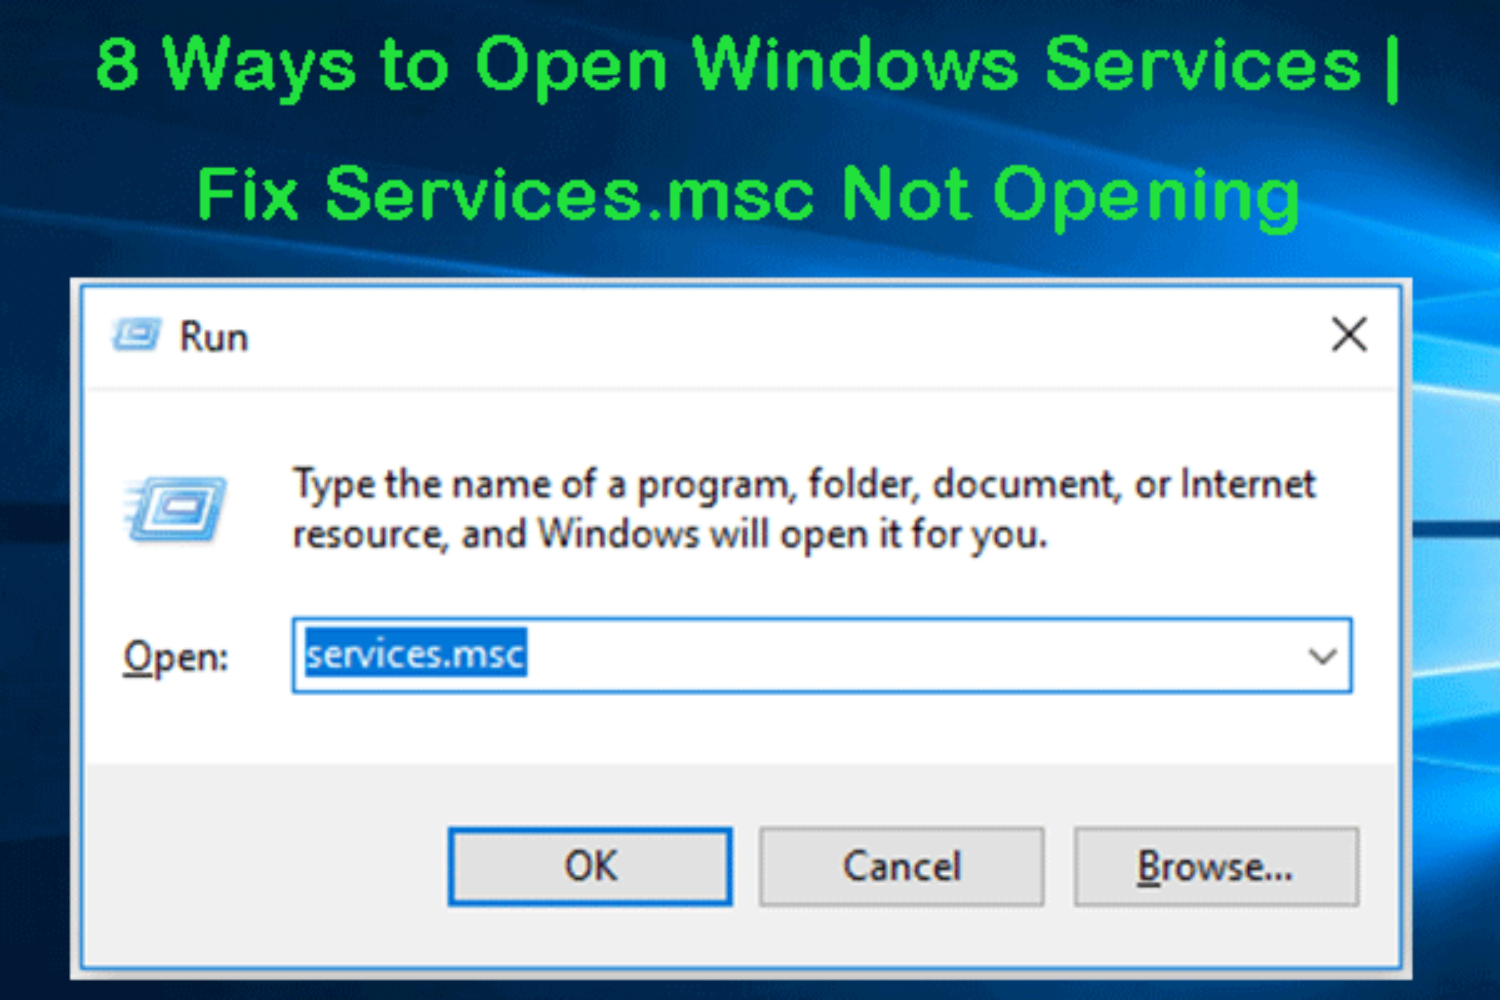 open run, then type services. msc.